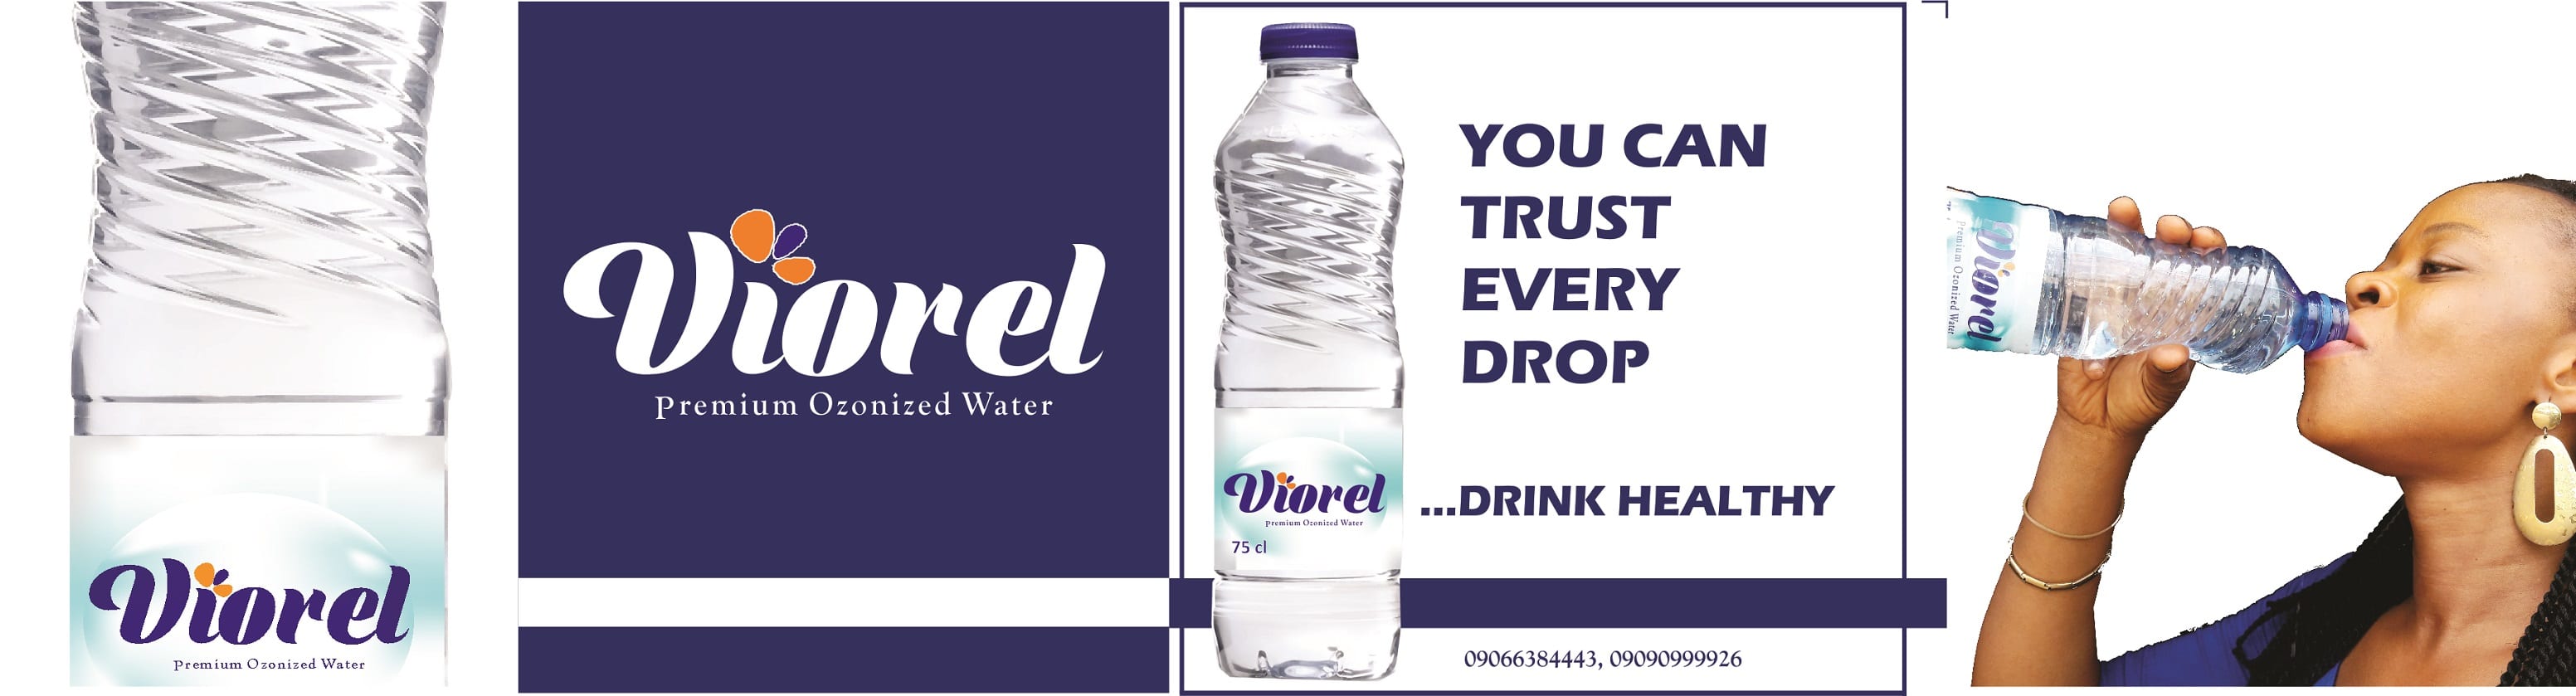 Viorel Premium Bottled water purity